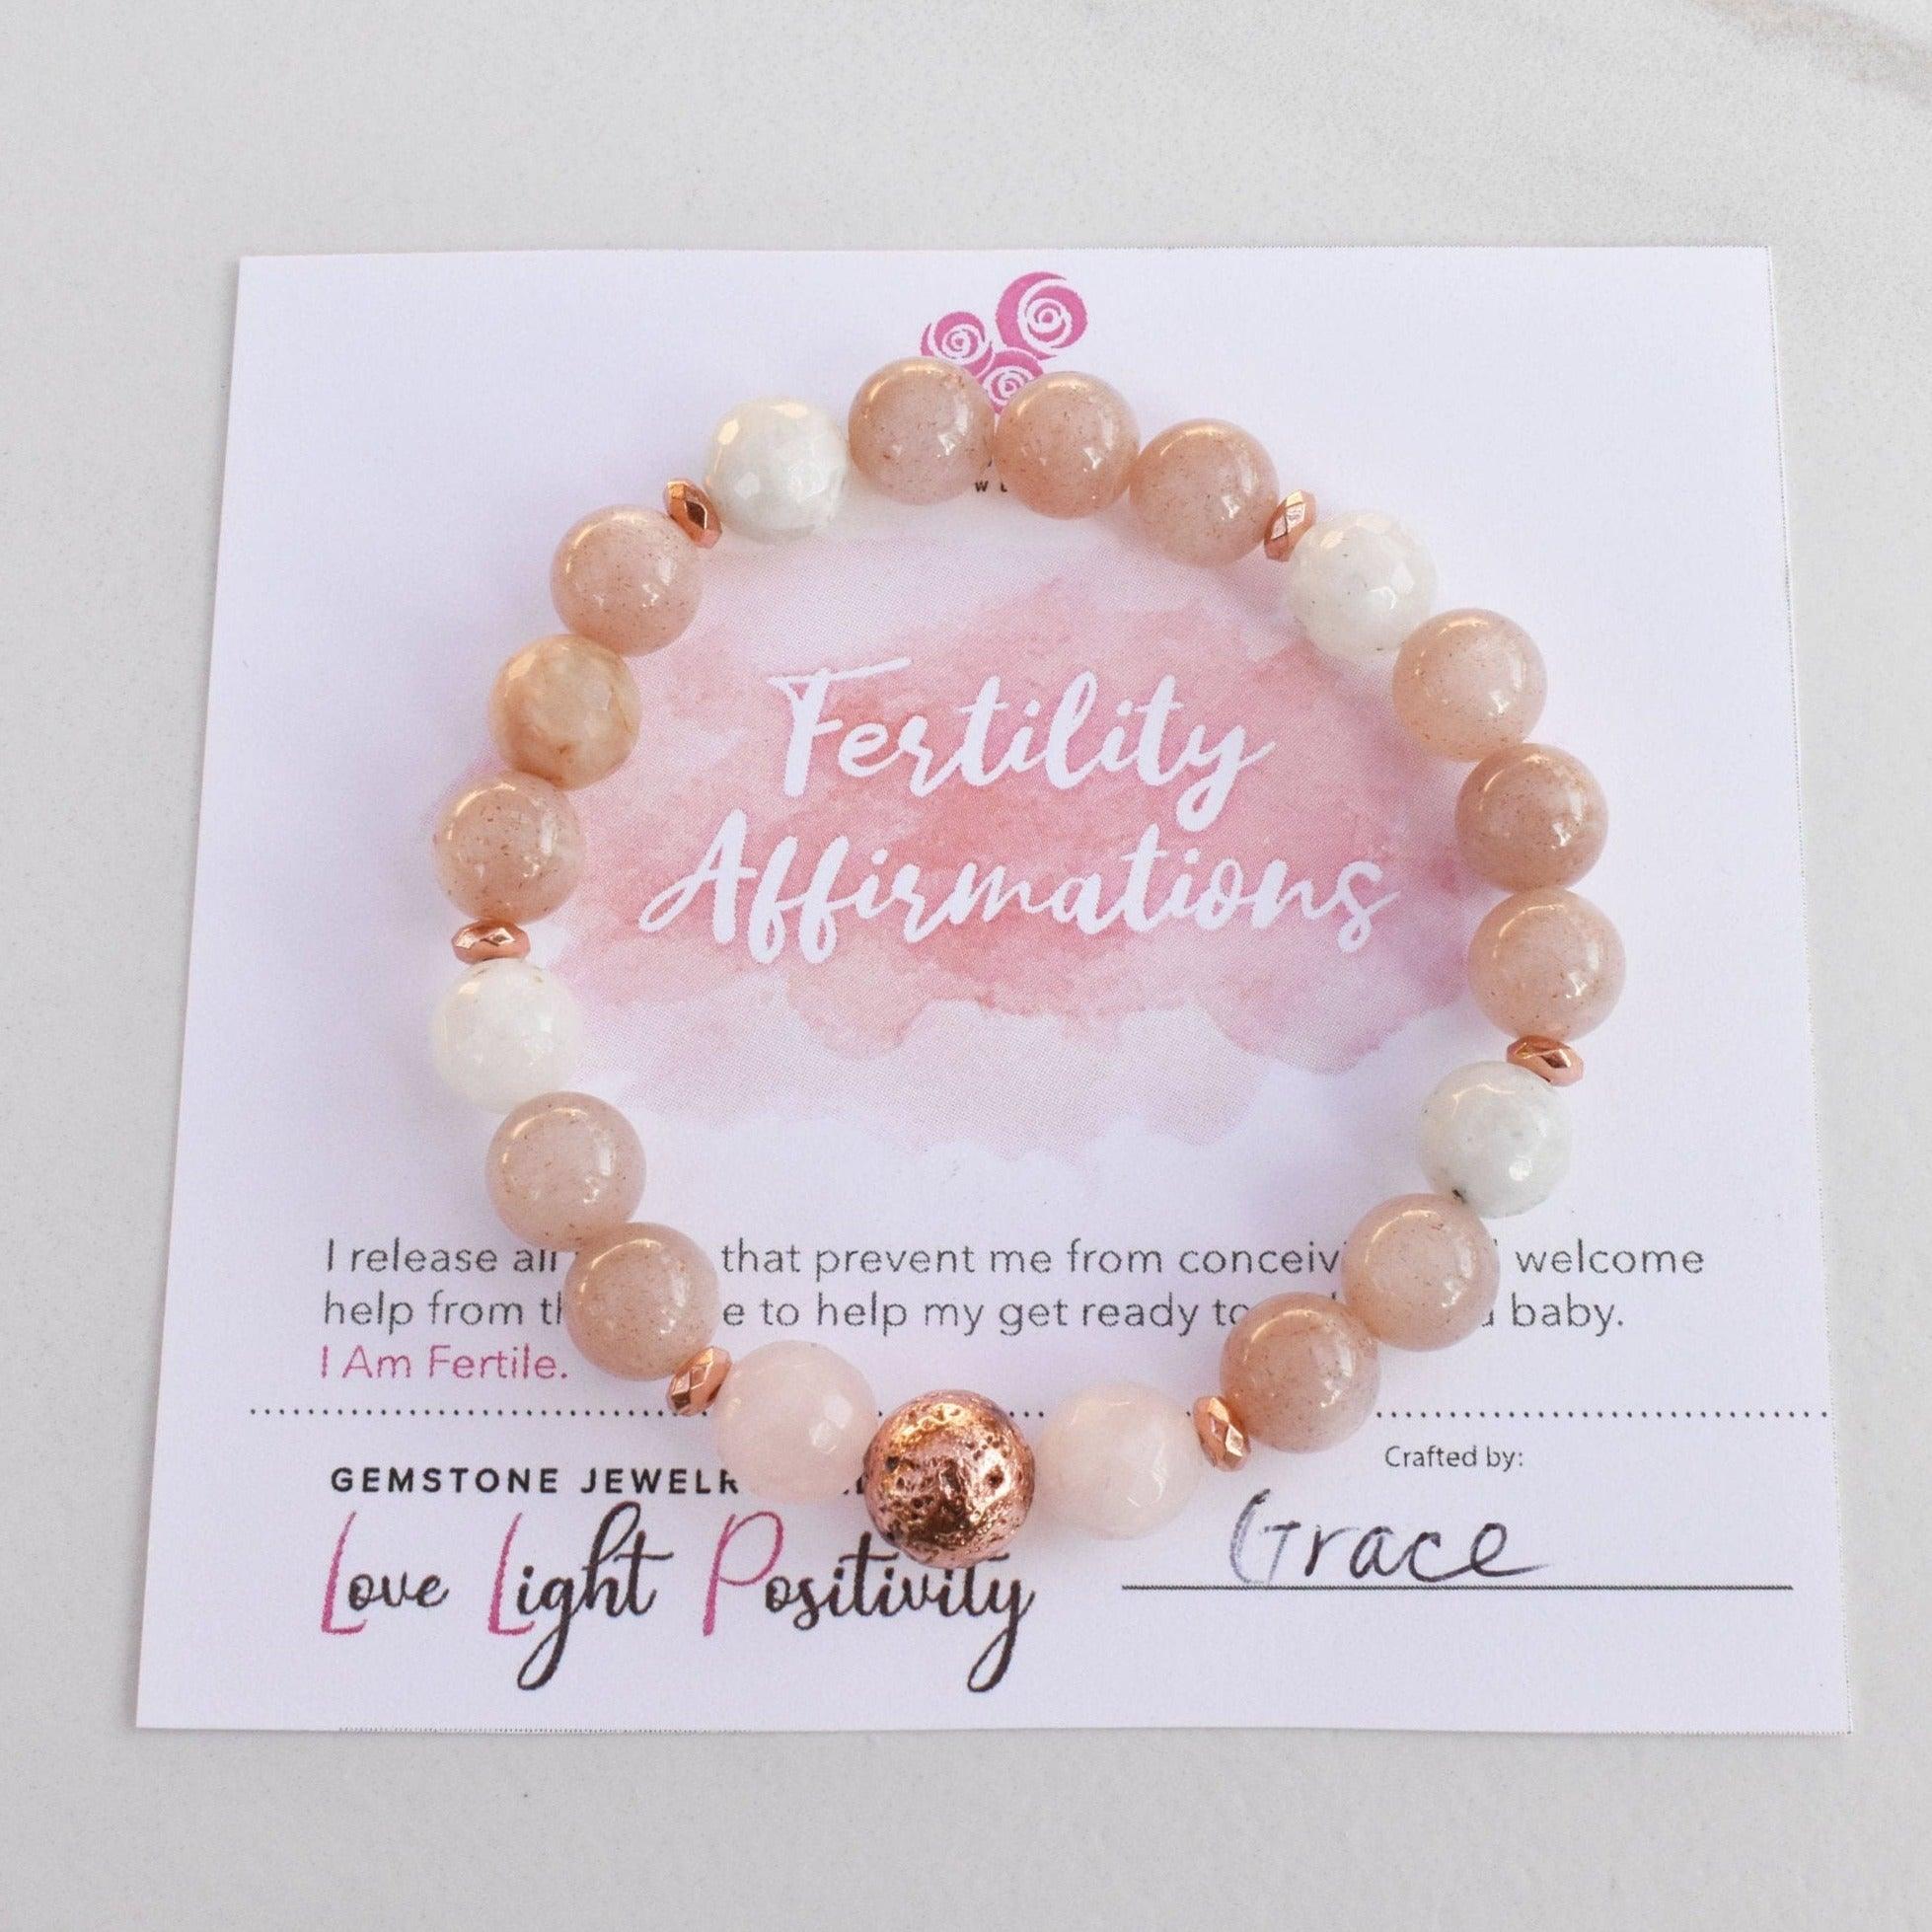 Peach & Rainbow Moonstone Fertility Affirmation Healing Gemstone Bracelet With Reiki Energy - 3Rosebudsco.com